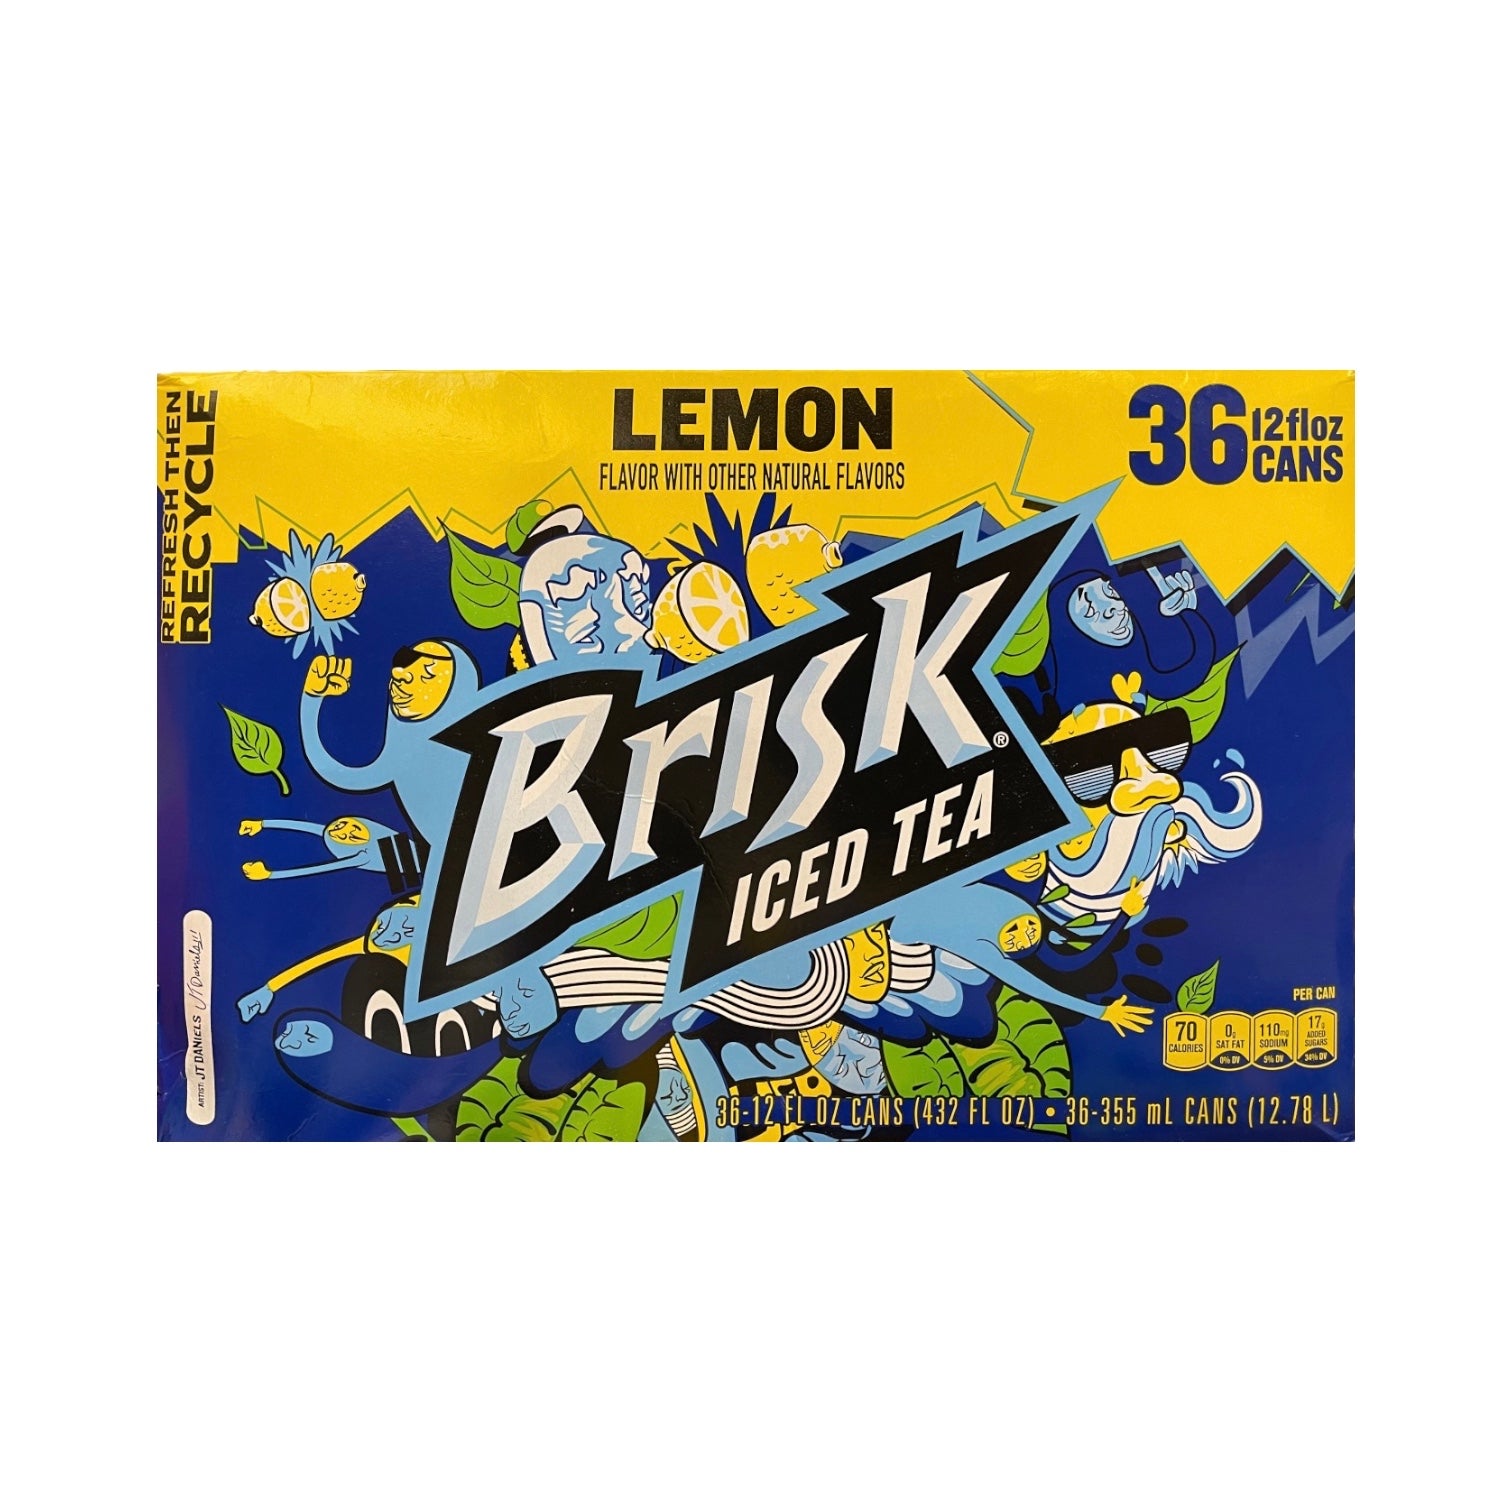 Brisk Iced Tea, Lemon (36 Count)